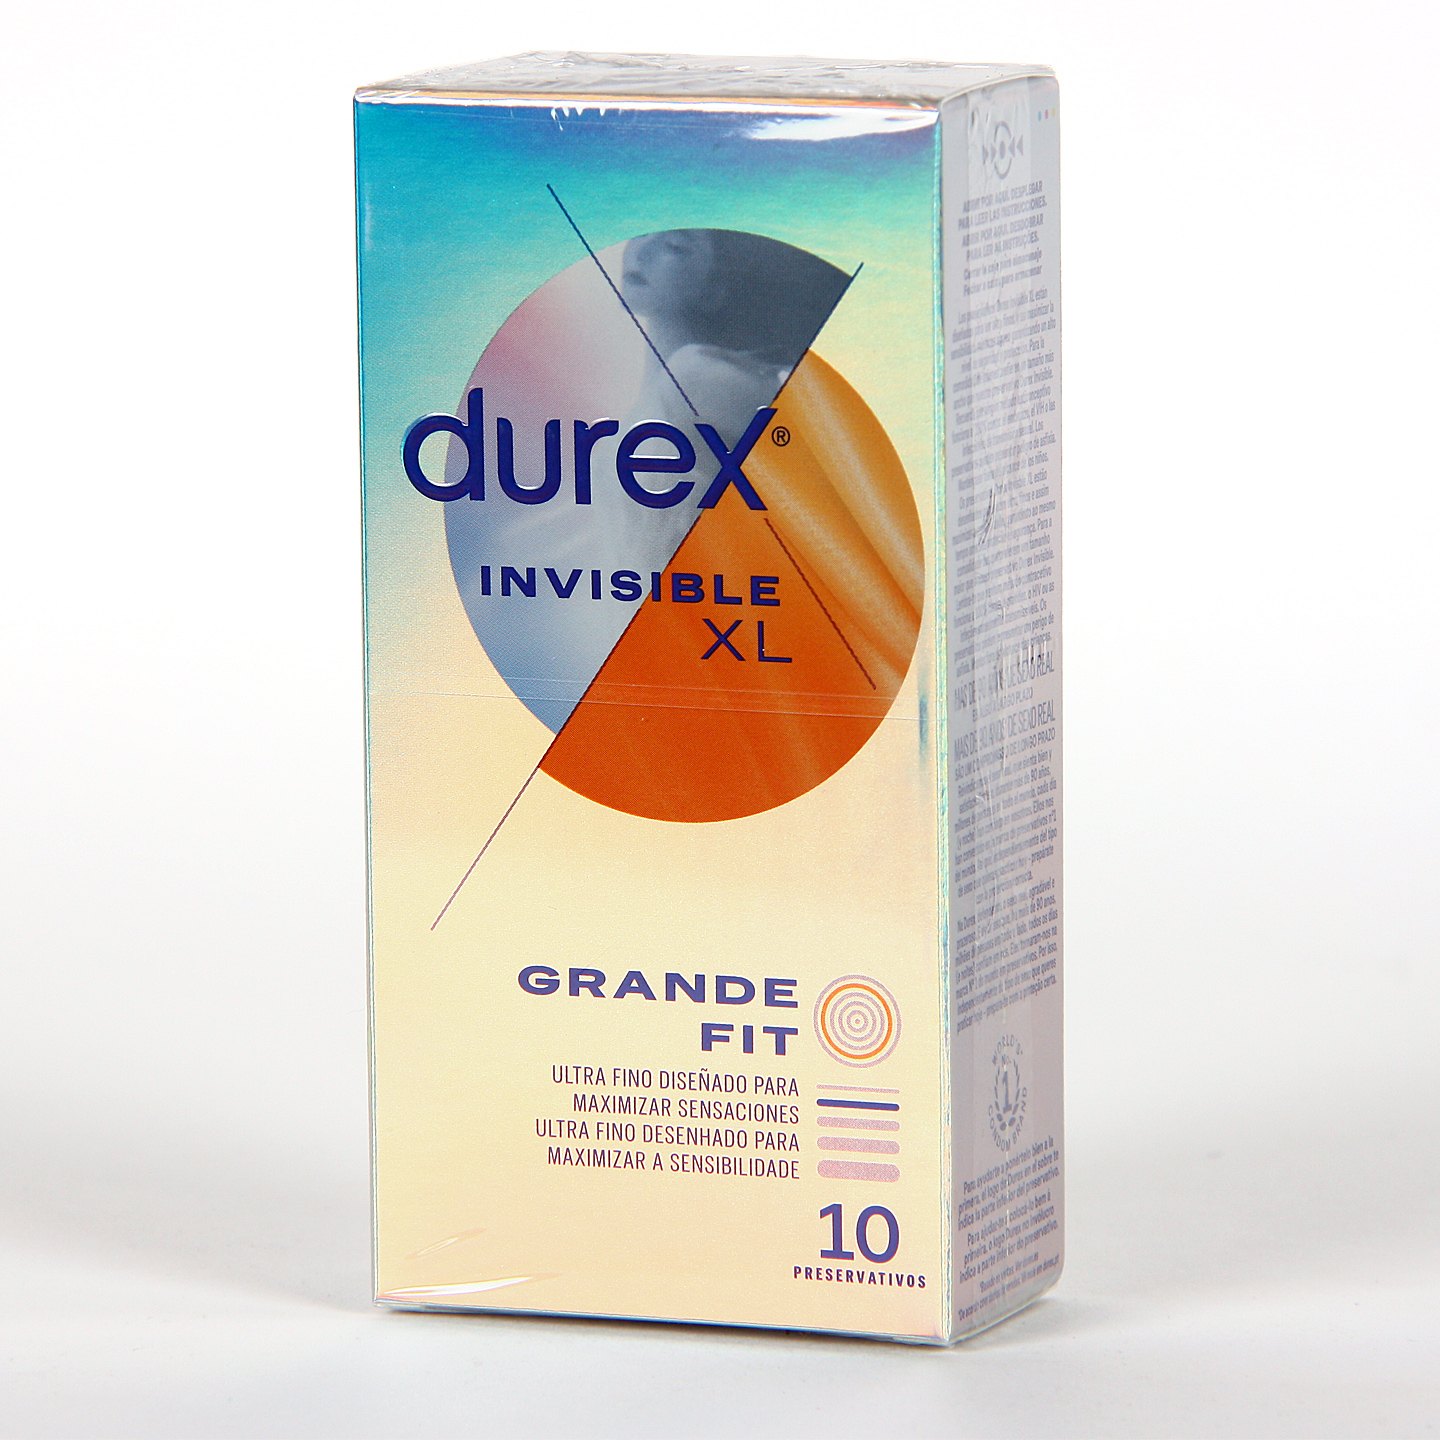 durex-sensitivo-XL-10-preservativos